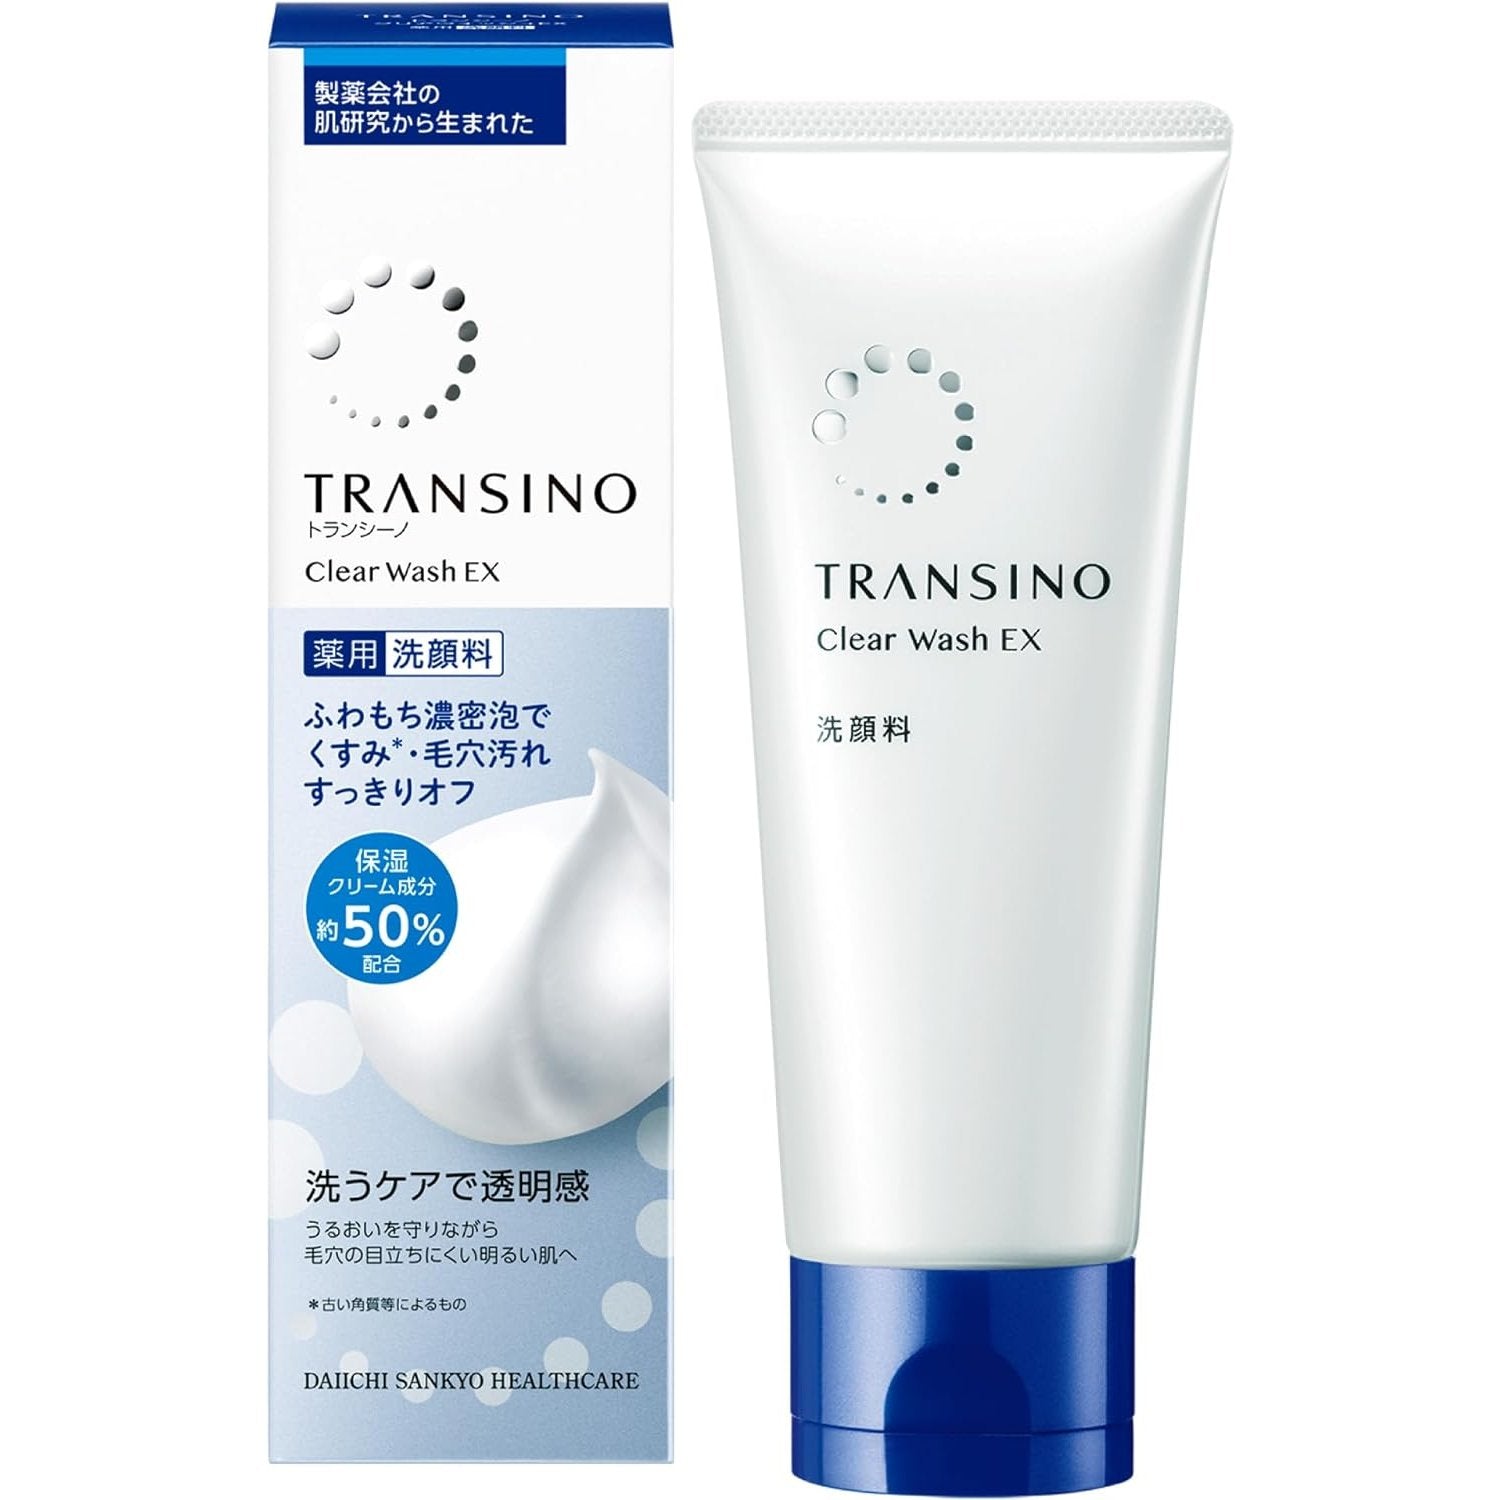 Transino Clear Wash EX Foaming Cleanser 100g